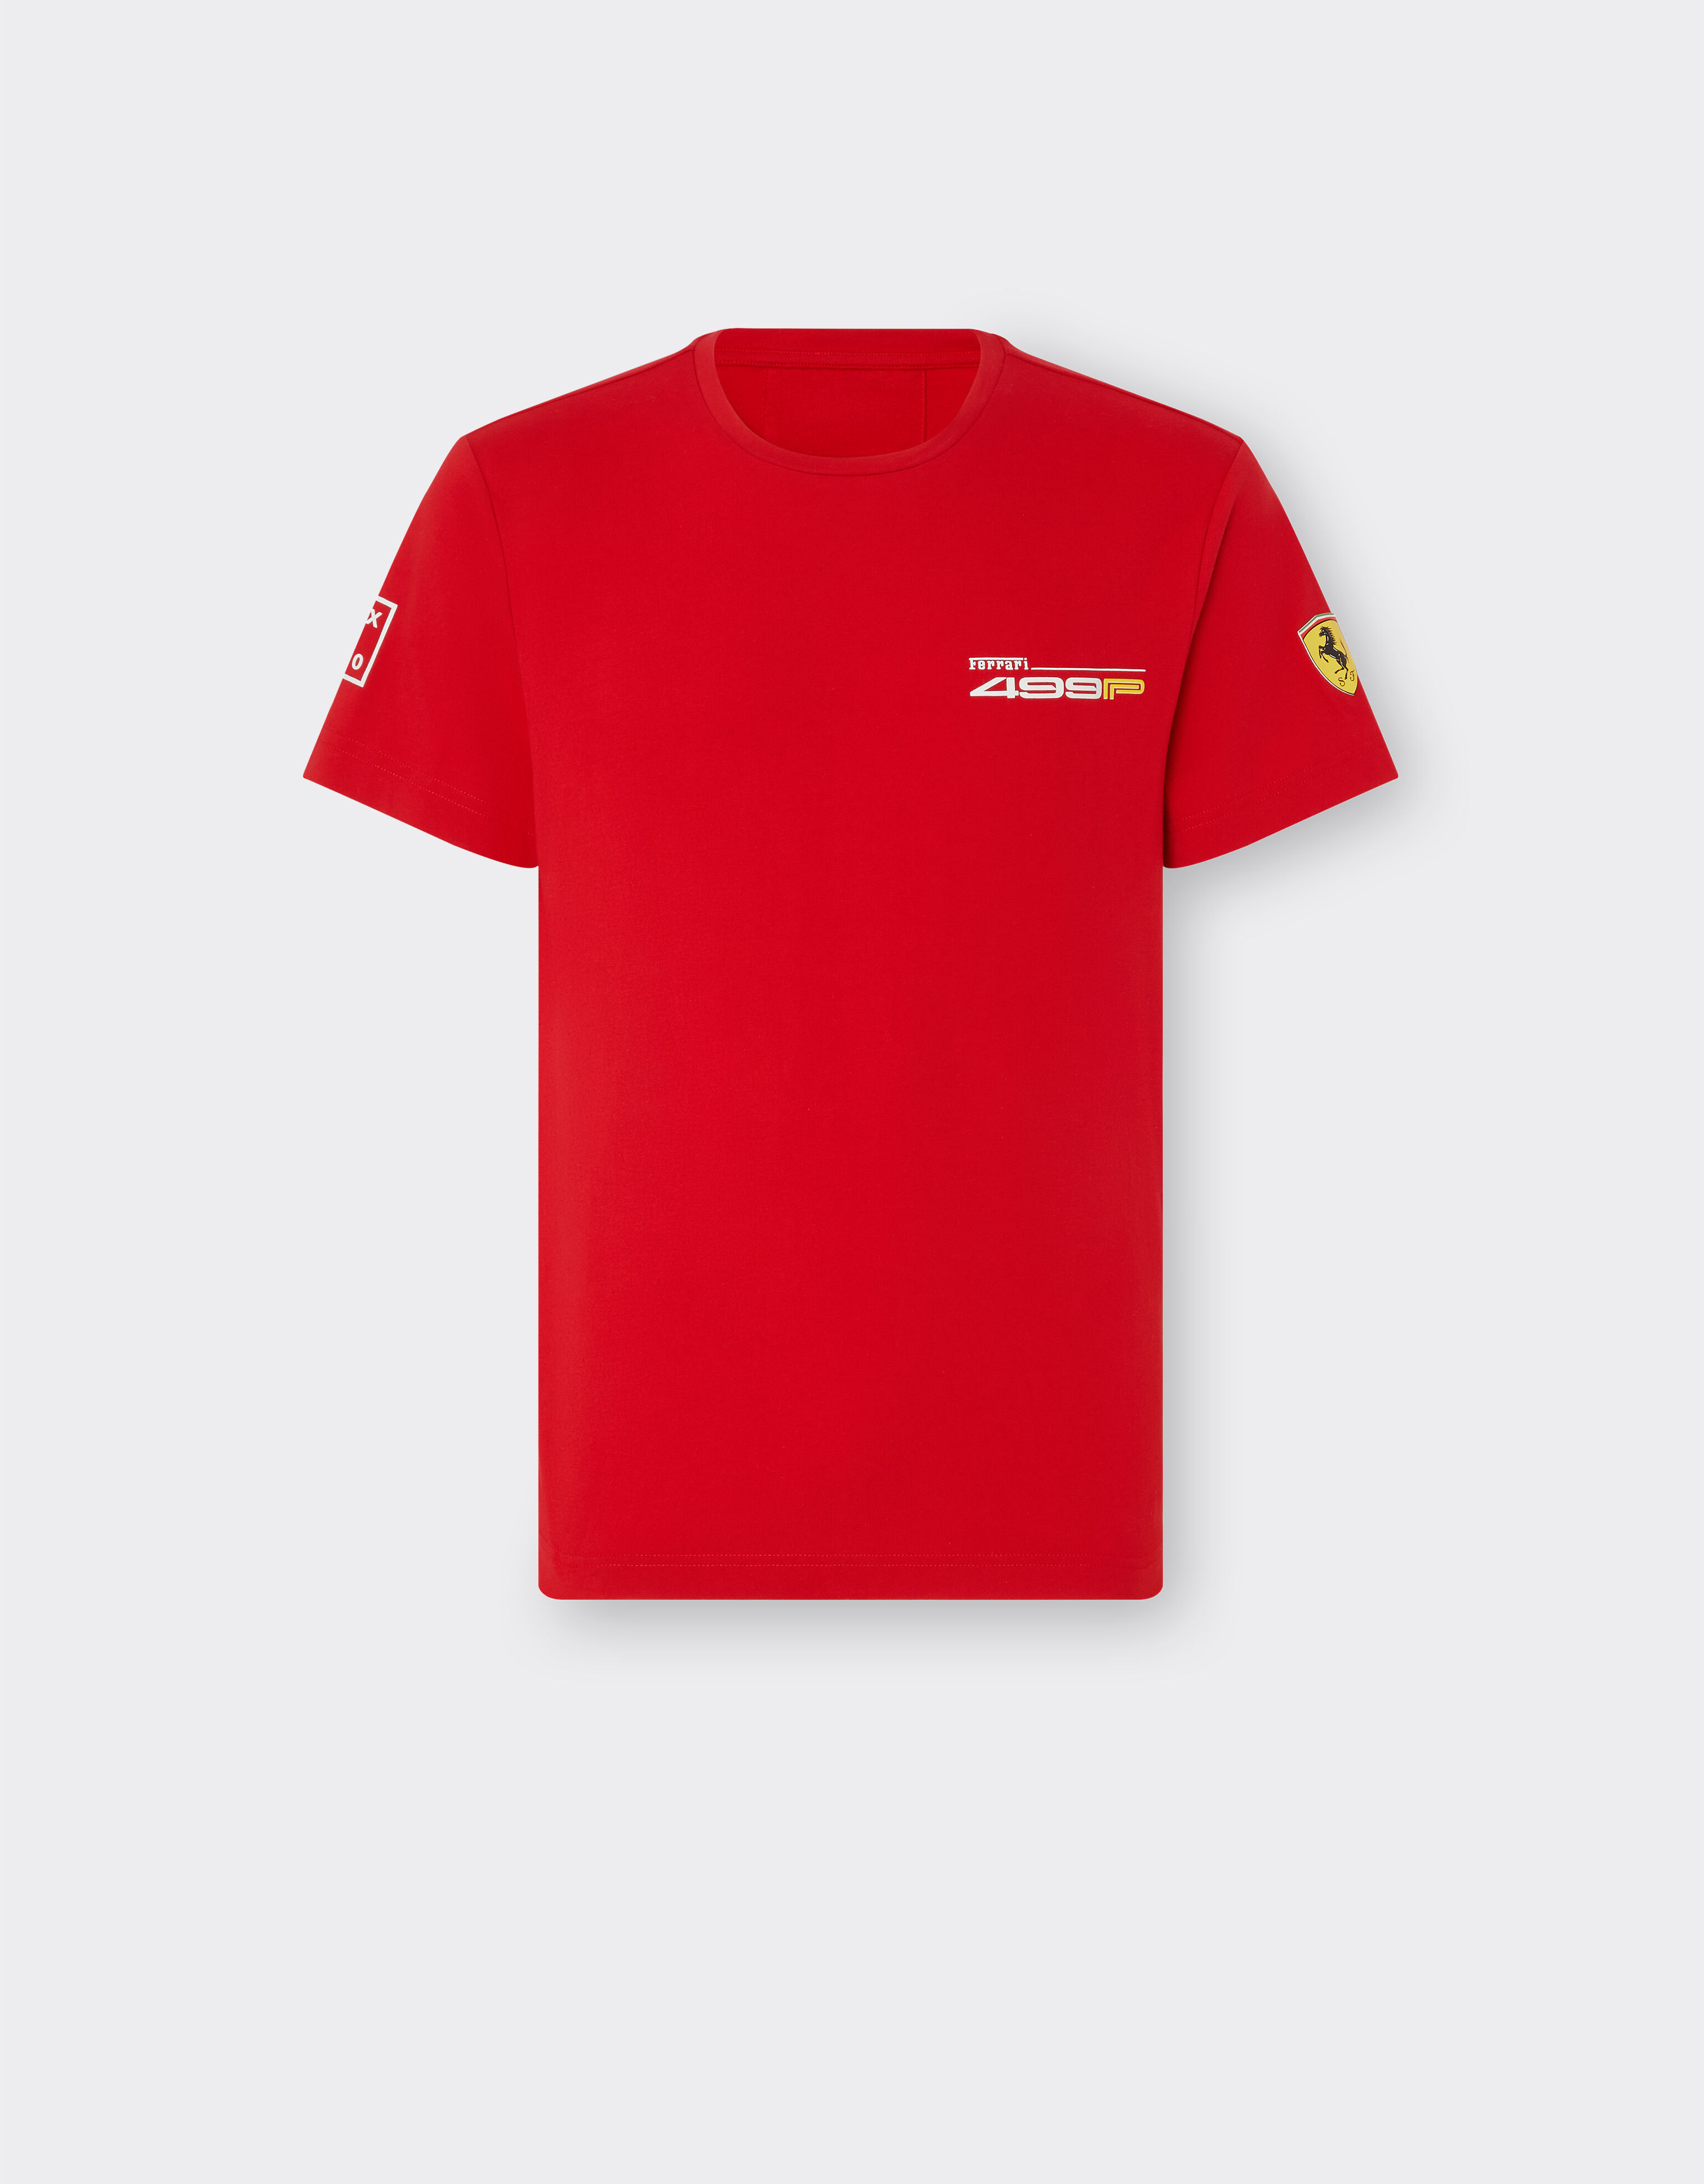 Ferrari T-shirt Ferrari Hypercar 499P Rosso Corsa F1146f